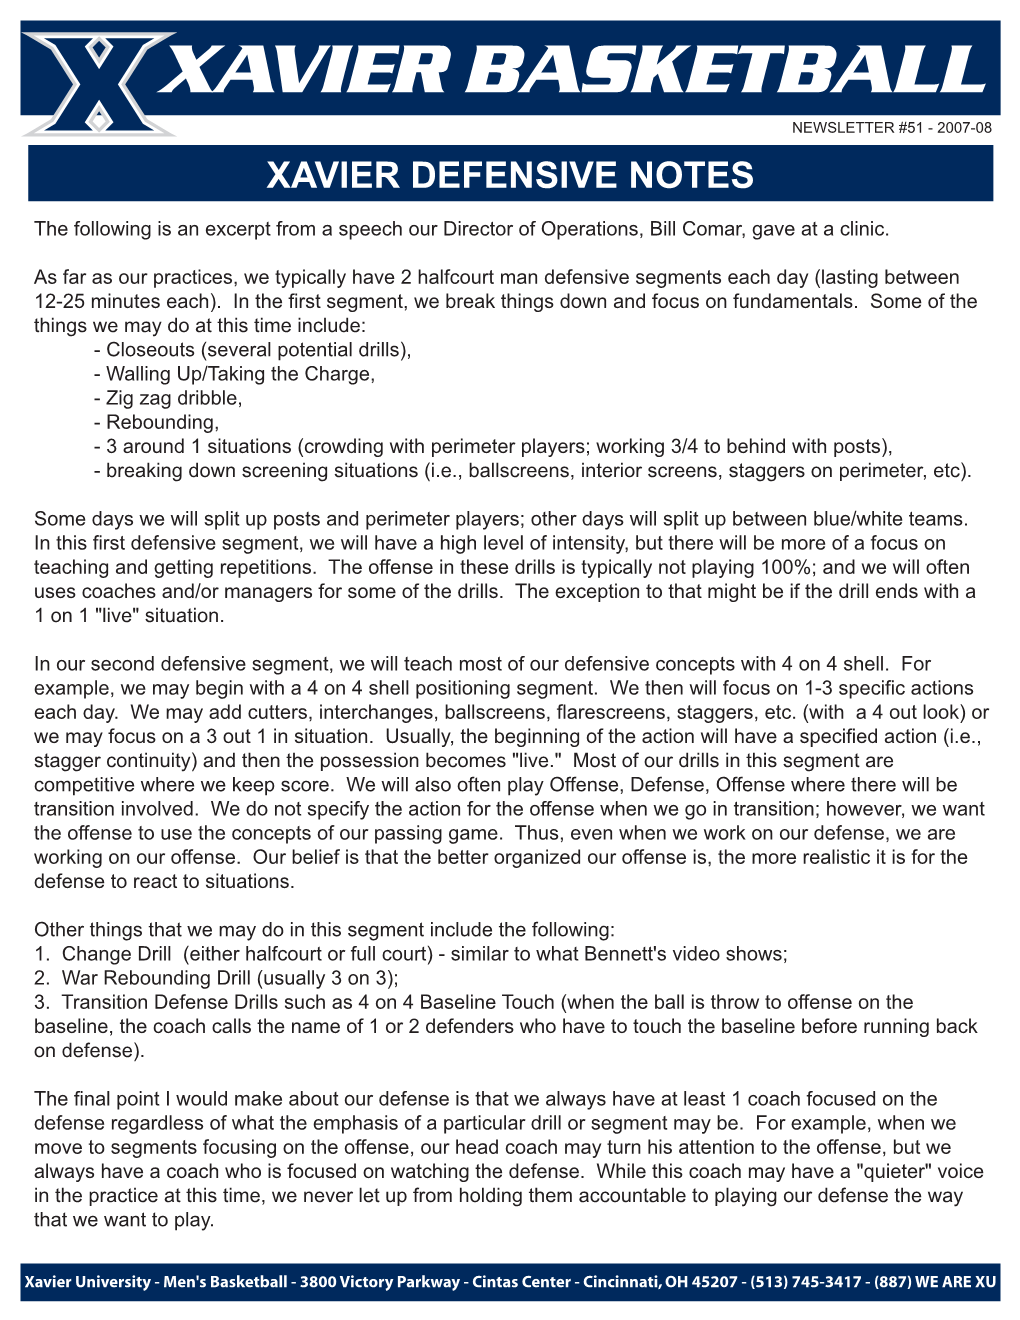 Xavier Defensive Notes